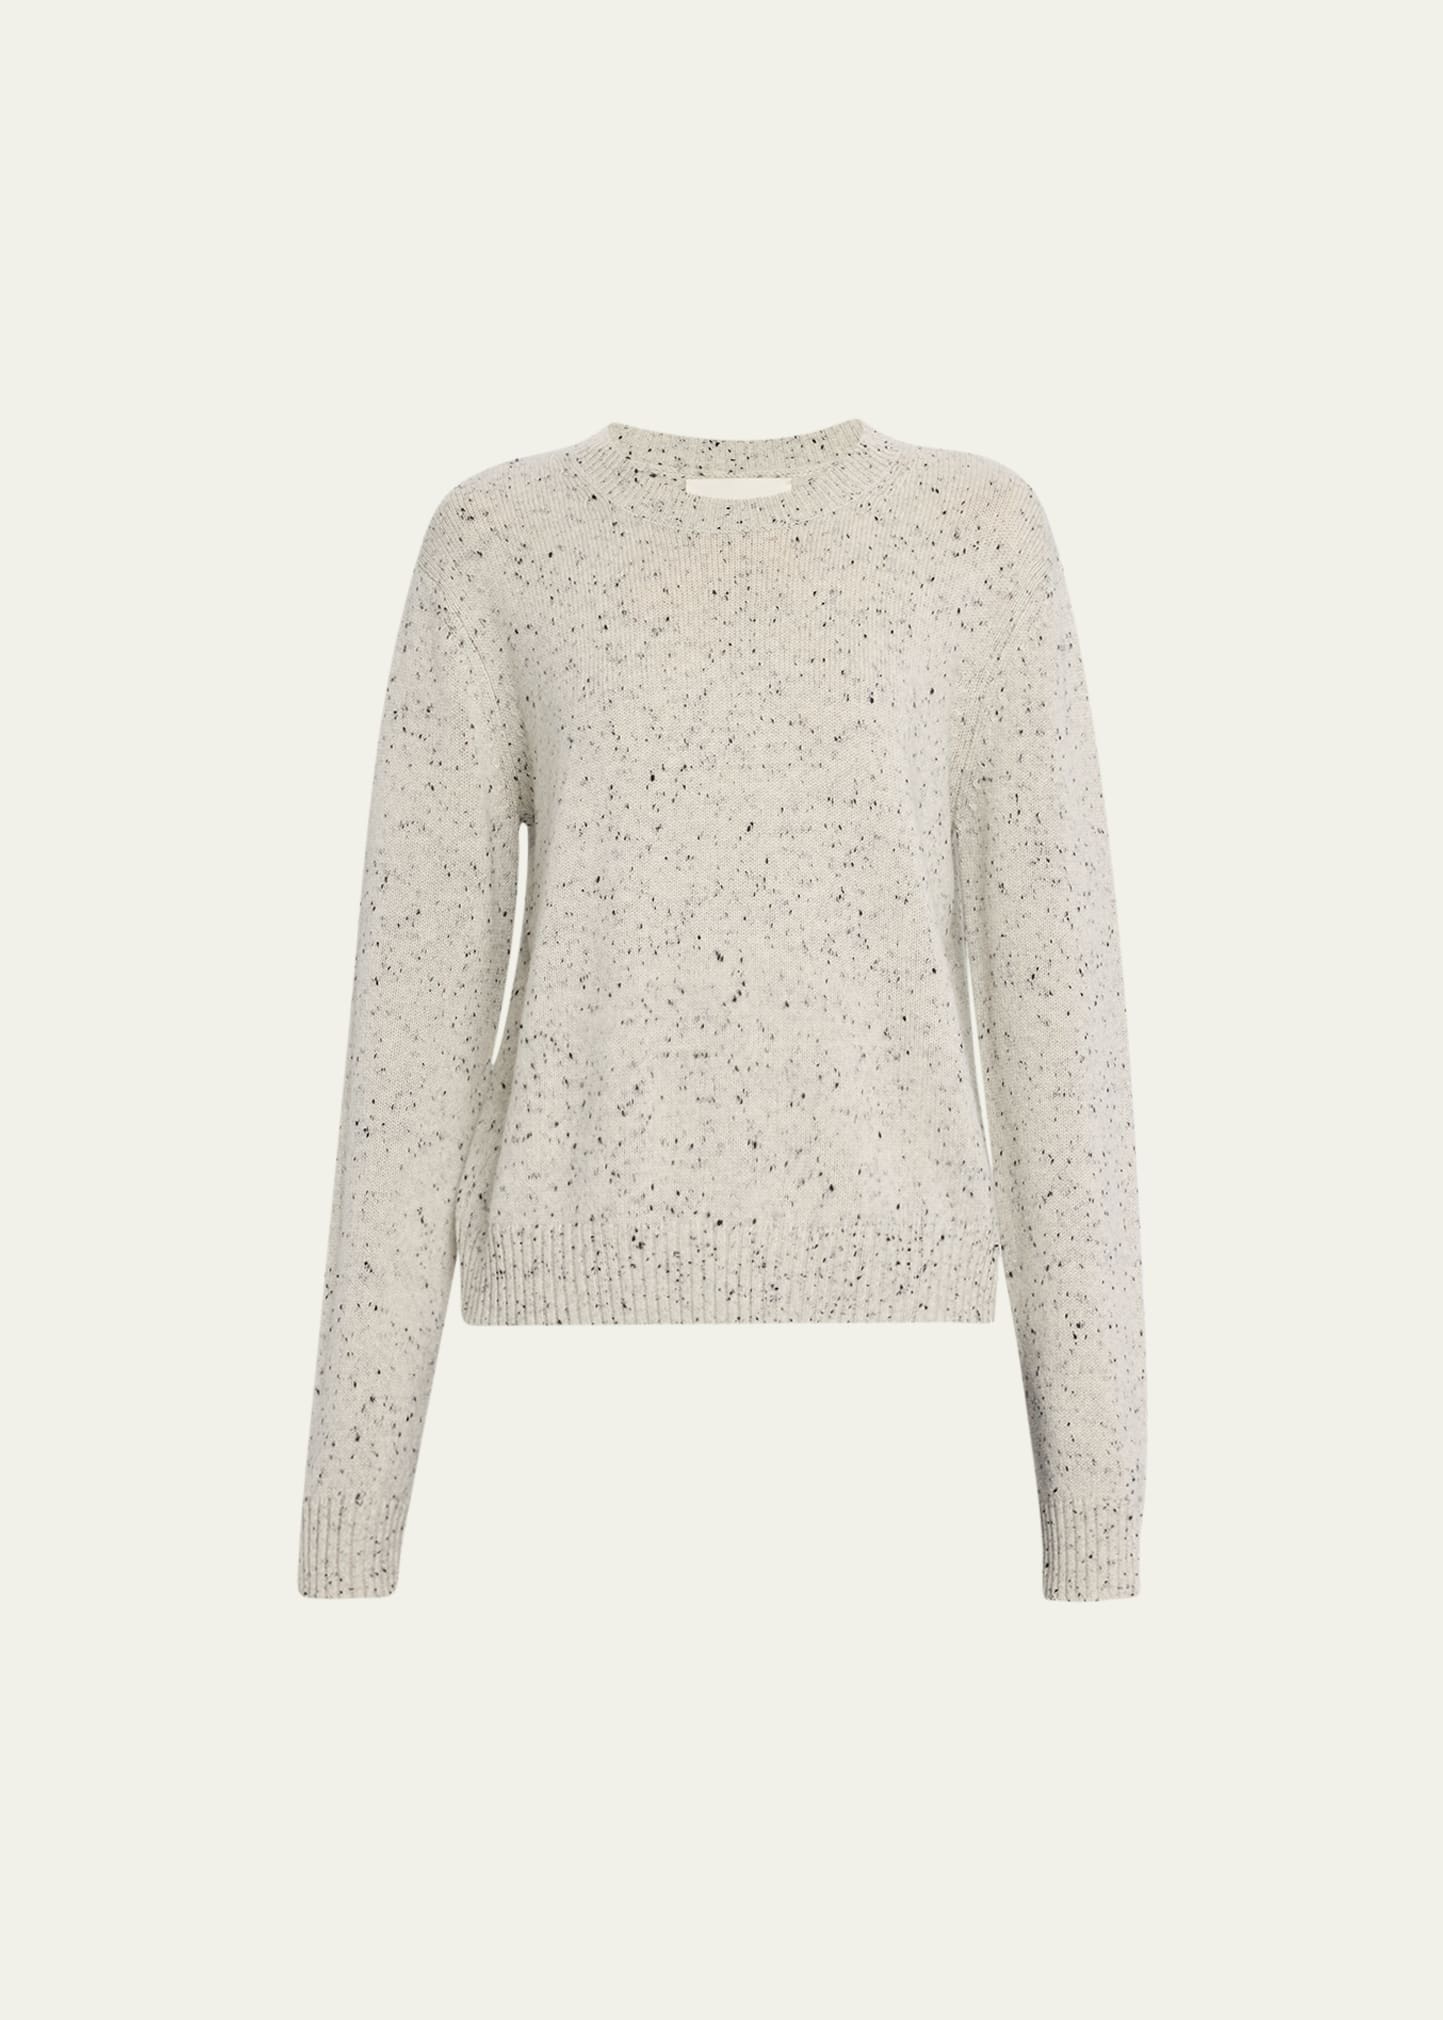 Marble Blender Cashmere Speckled Knit Sweater